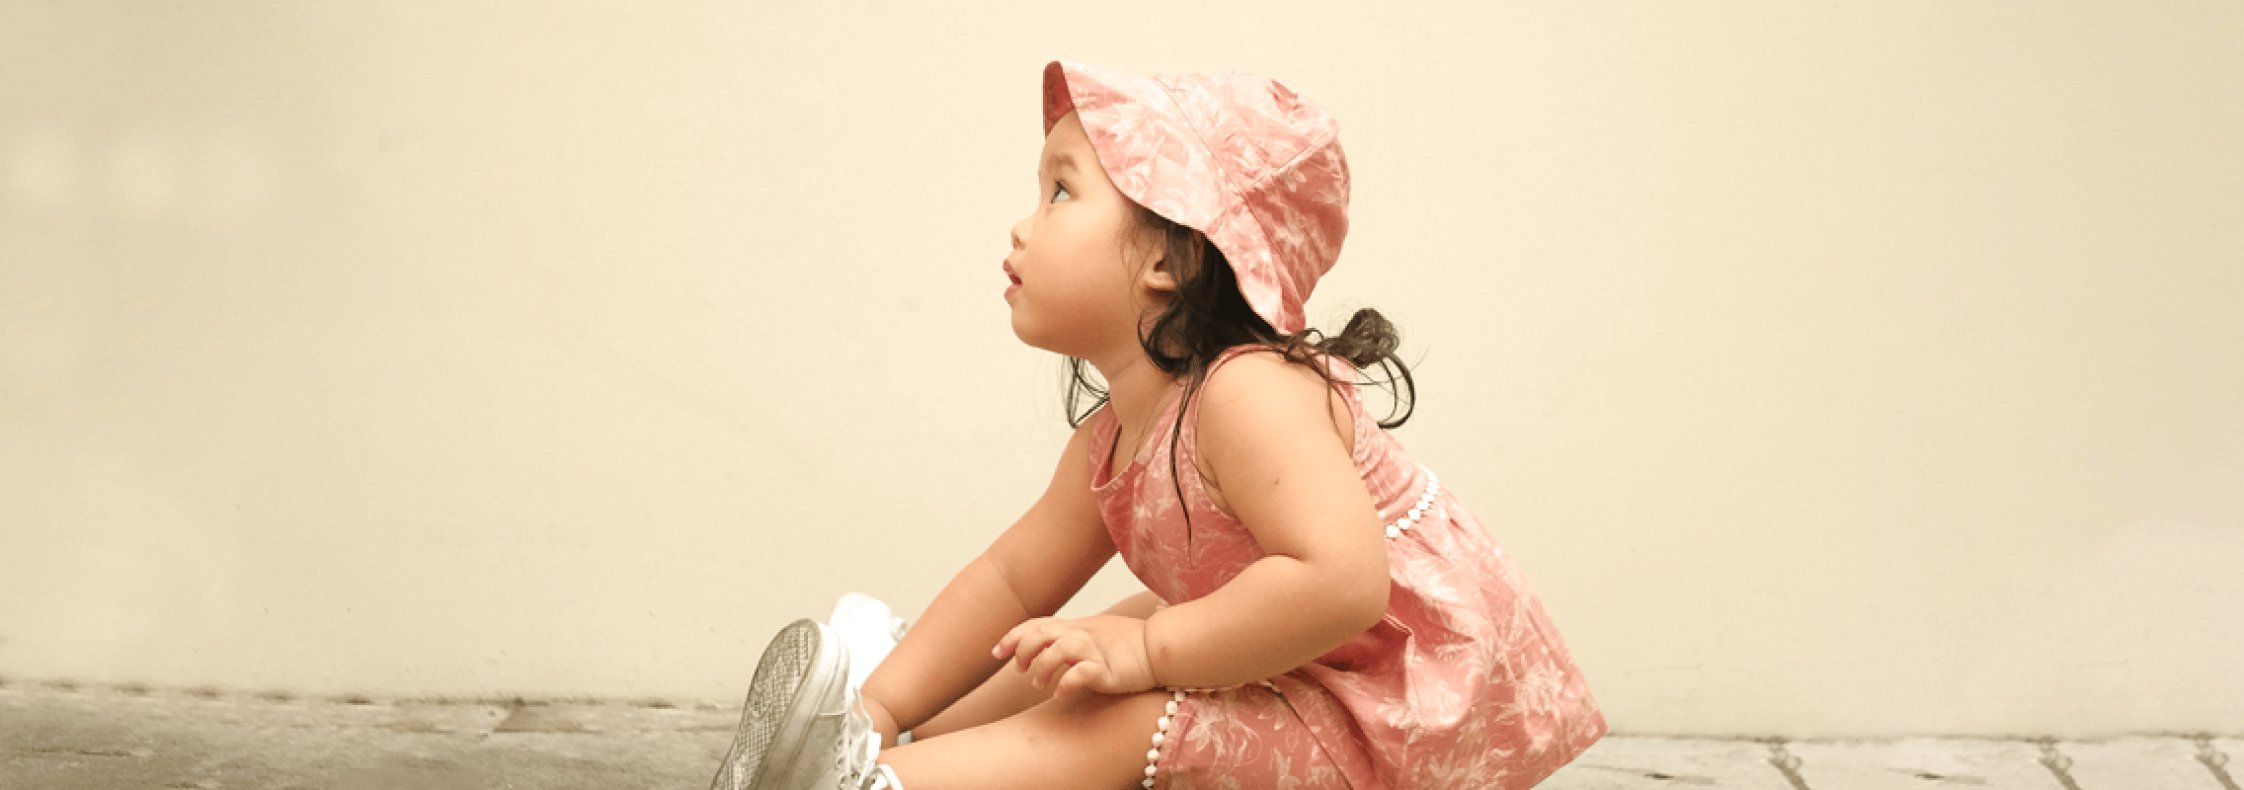 BABY GIRLS | Number 1 kids & children's fashion store. Shop online atgingersnaps.com.ph